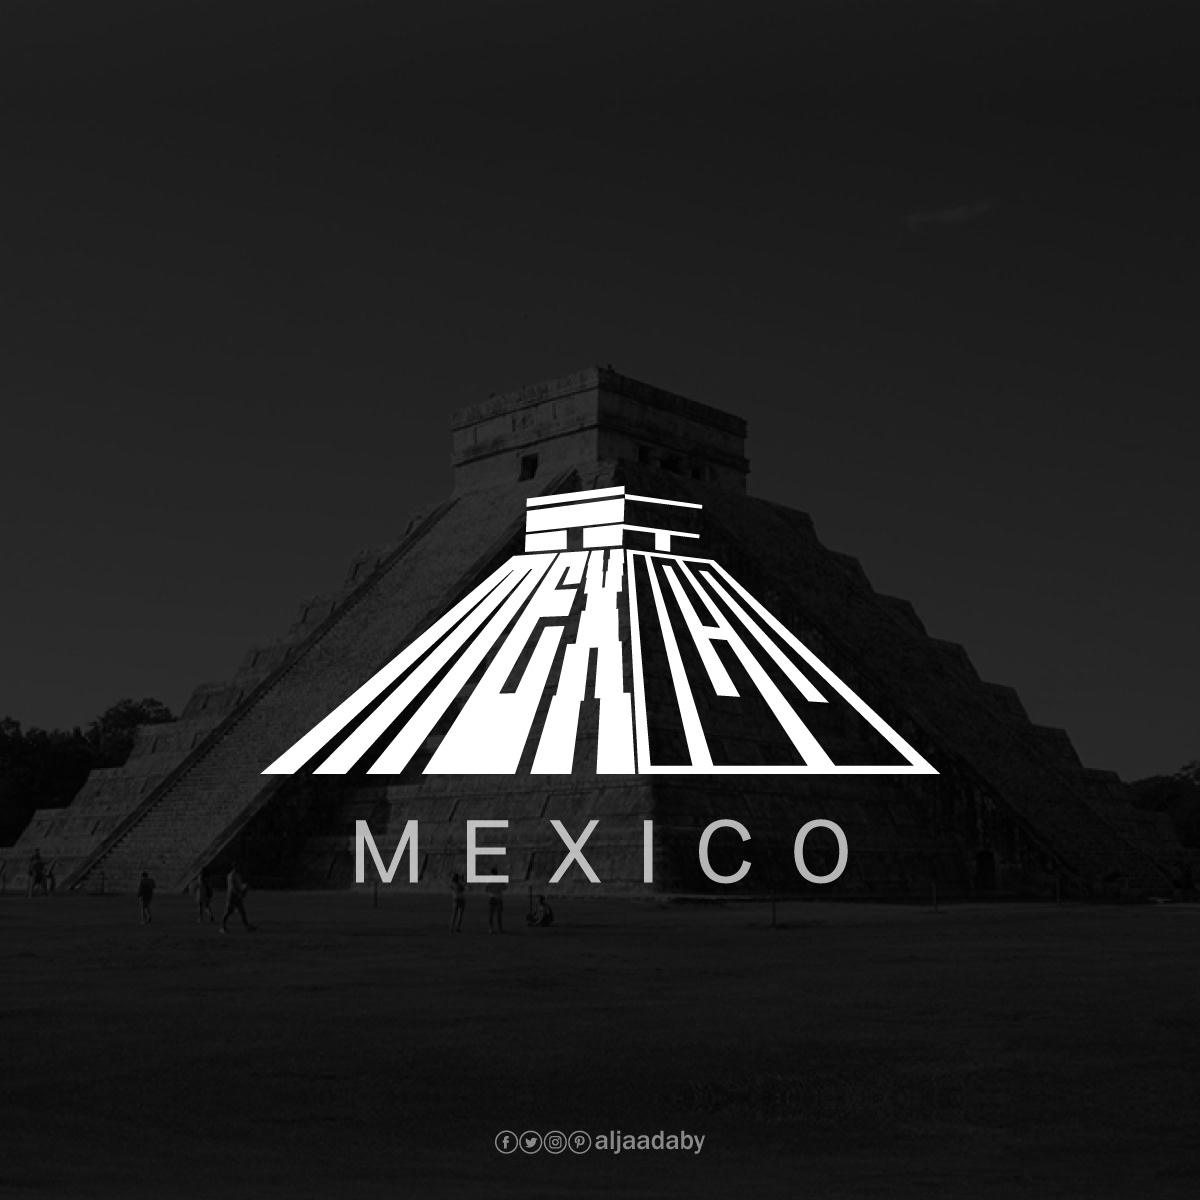 Typographic city logos based on their famous landmarks - Mexico